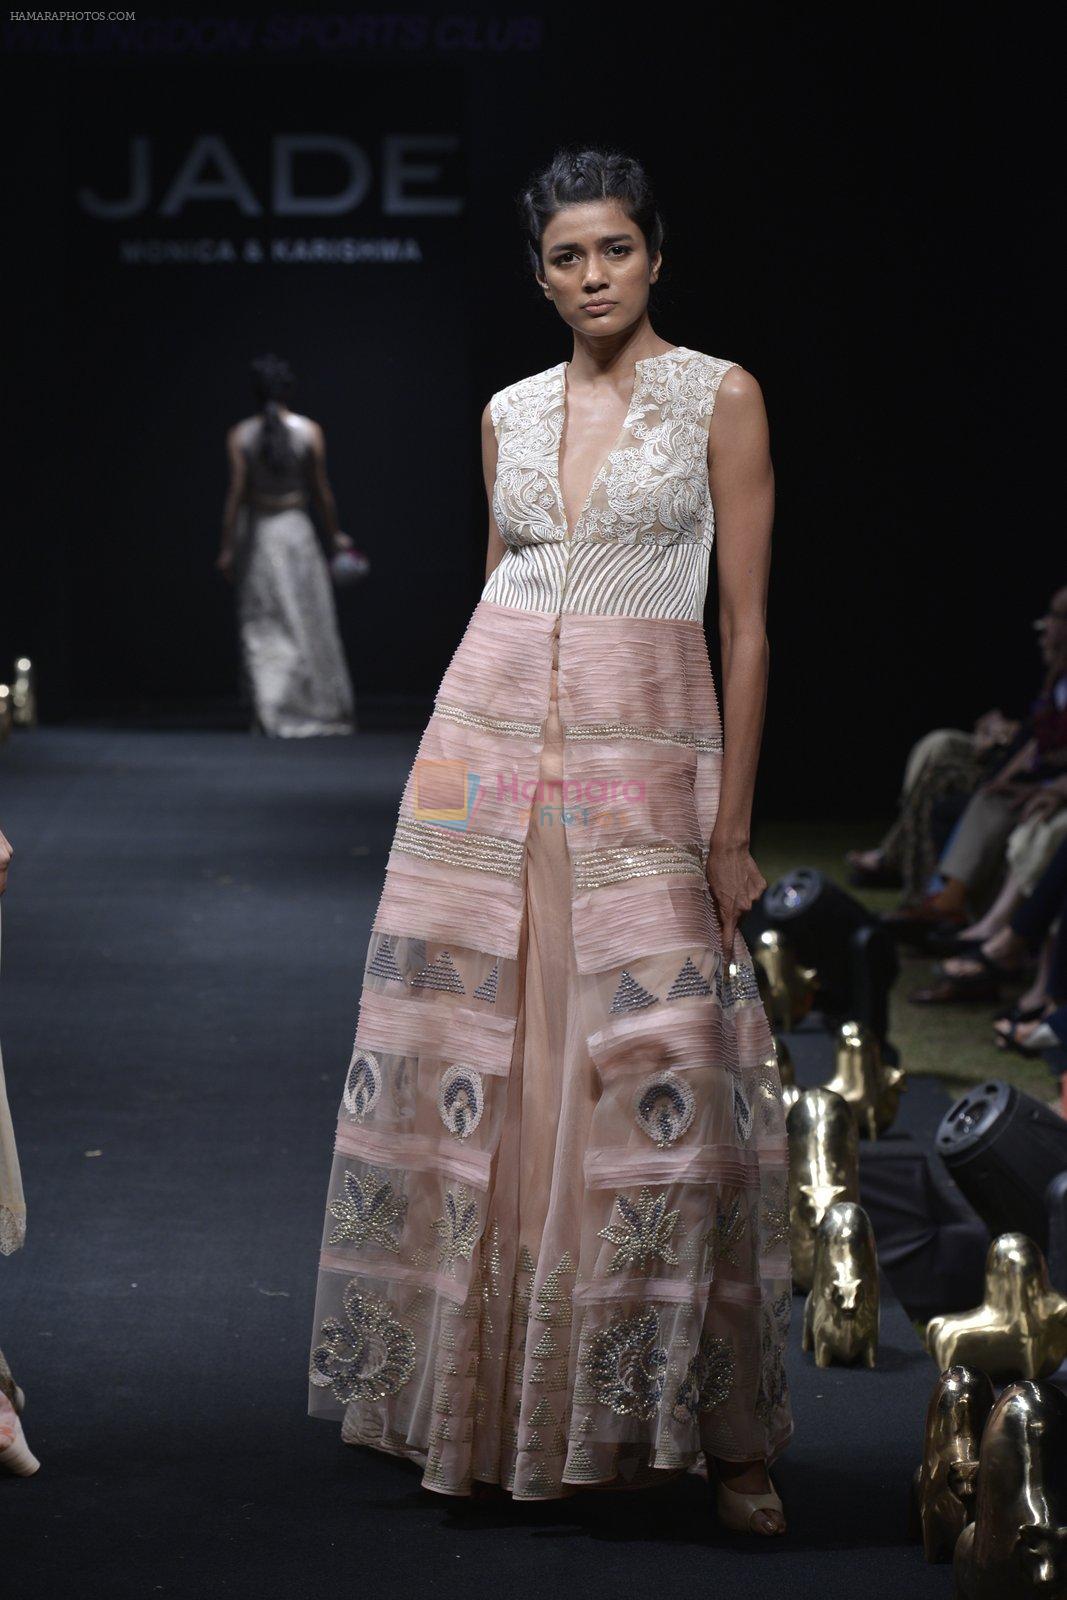 Model walks for Jade Fashion Show in Mumbai on 24th Feb 2016